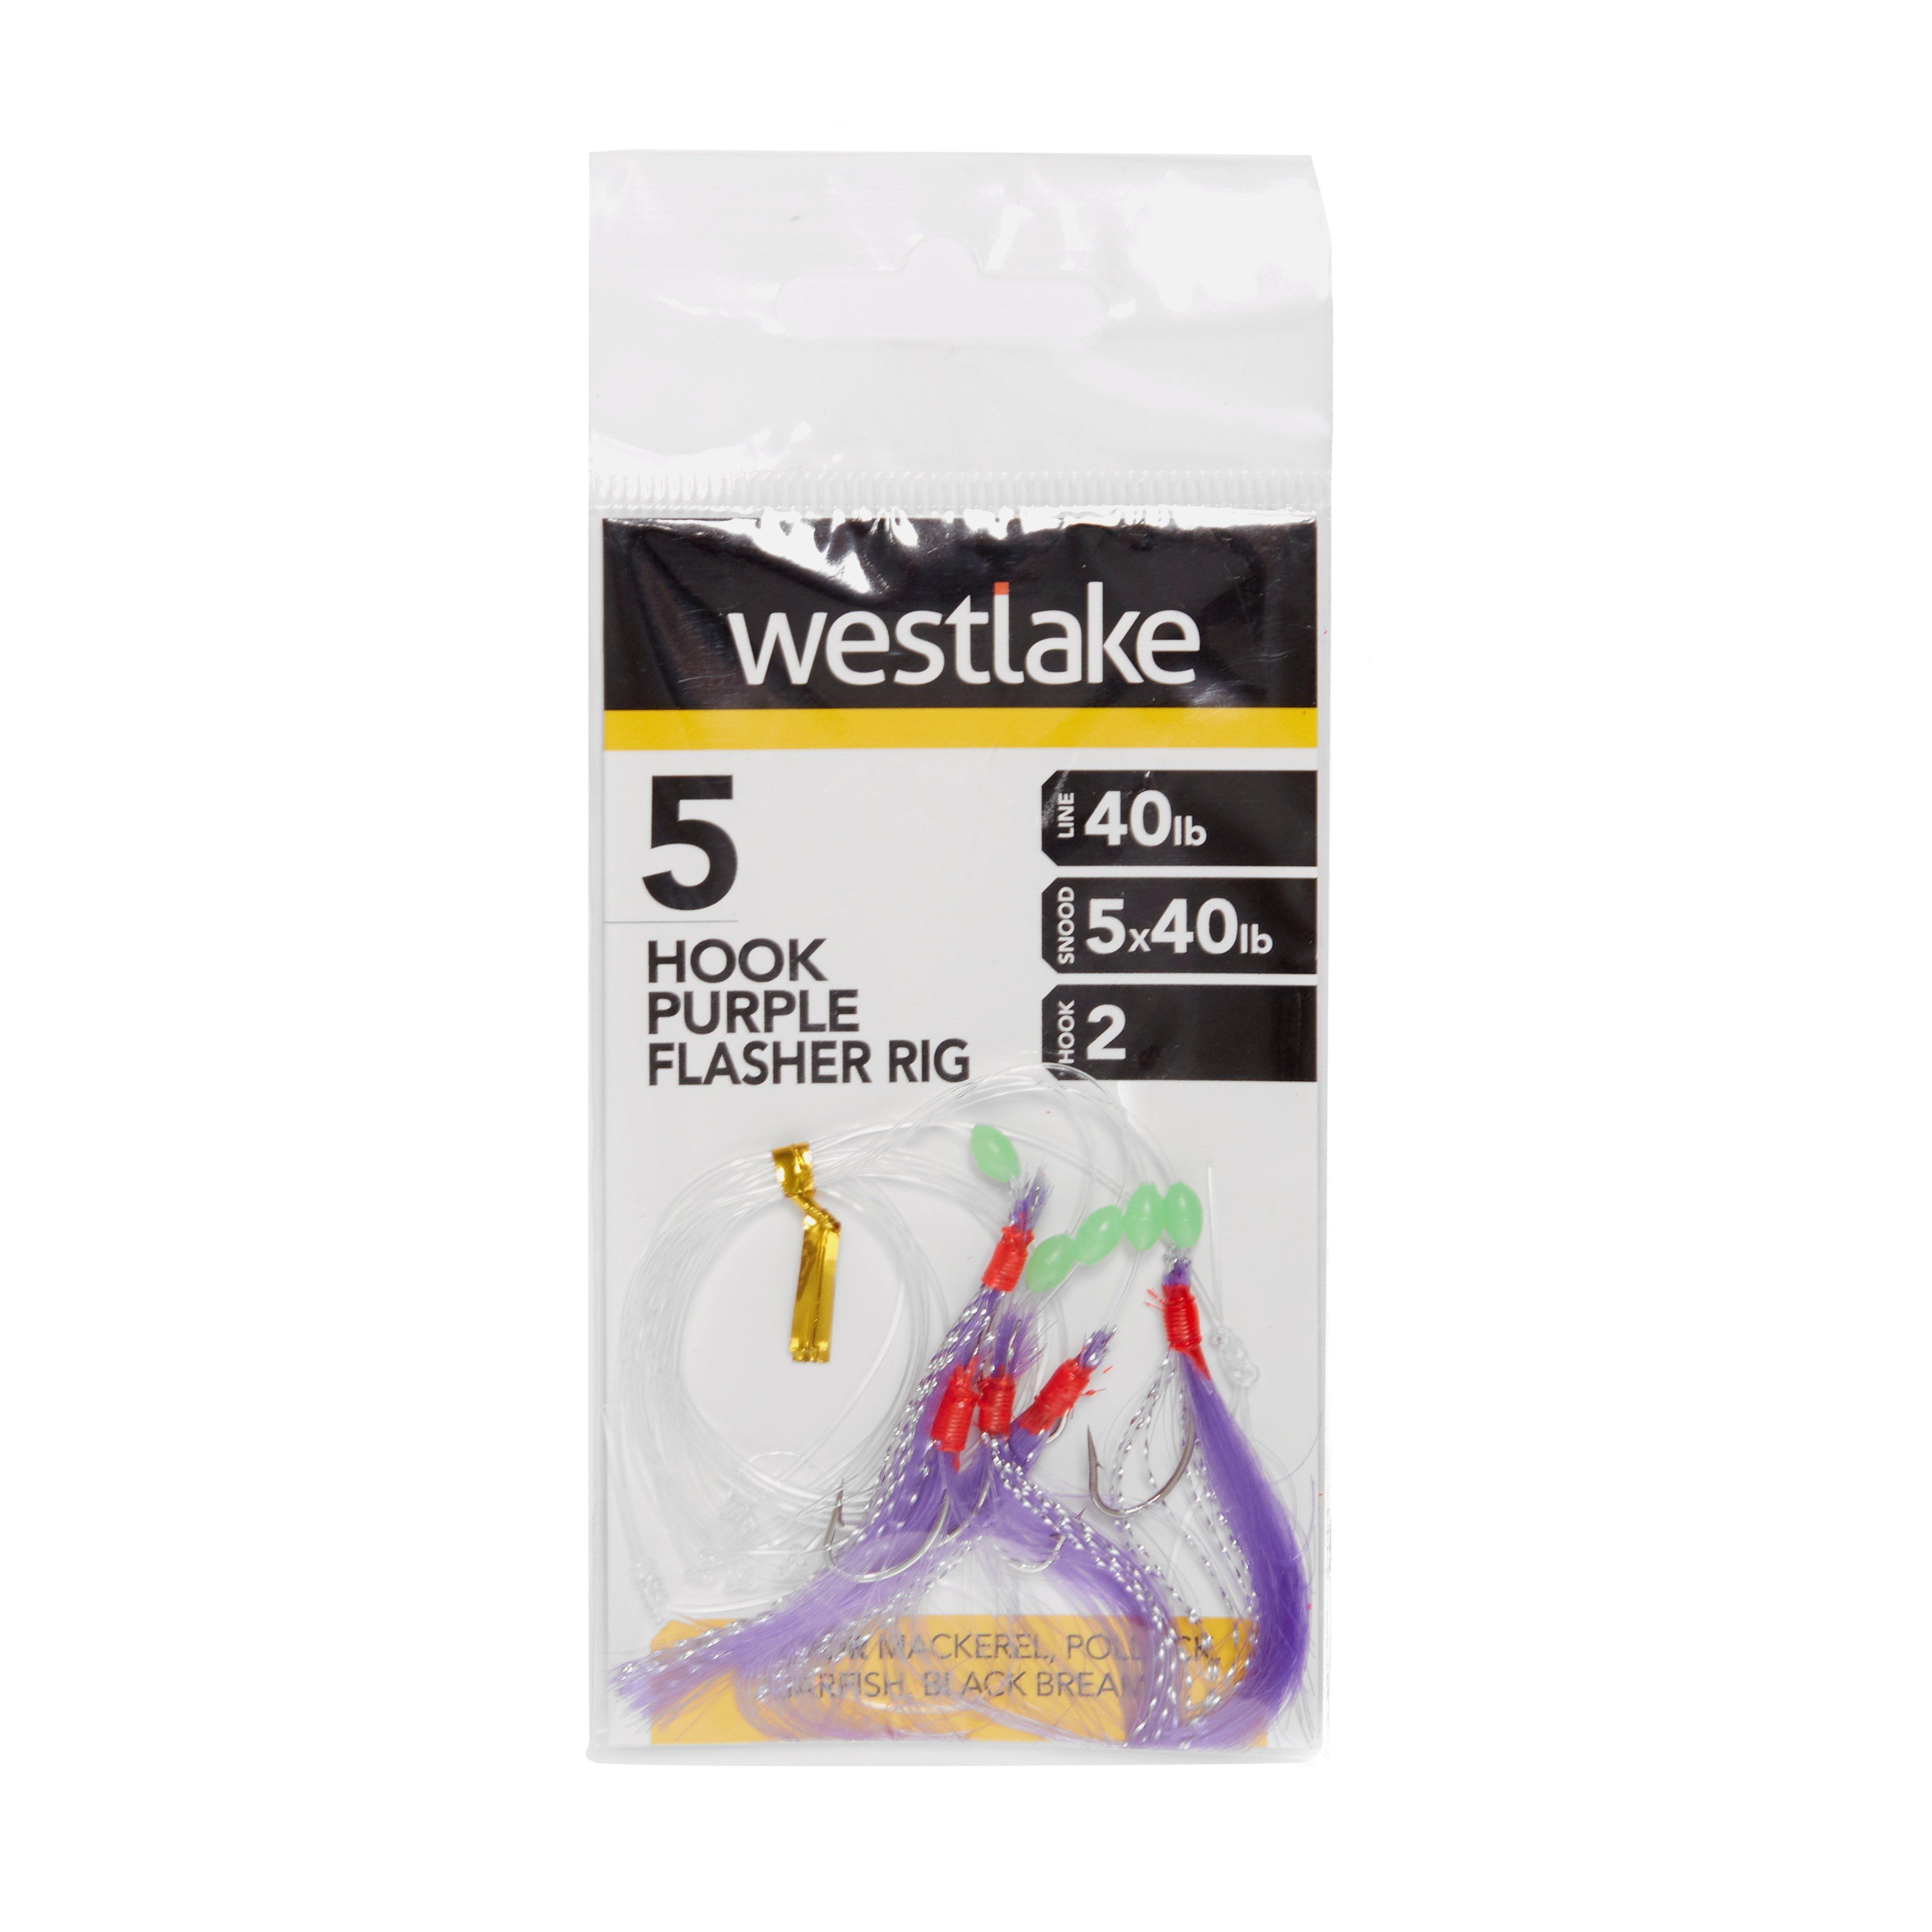 Westlake 5 Hook Purple Flasher 2 Review